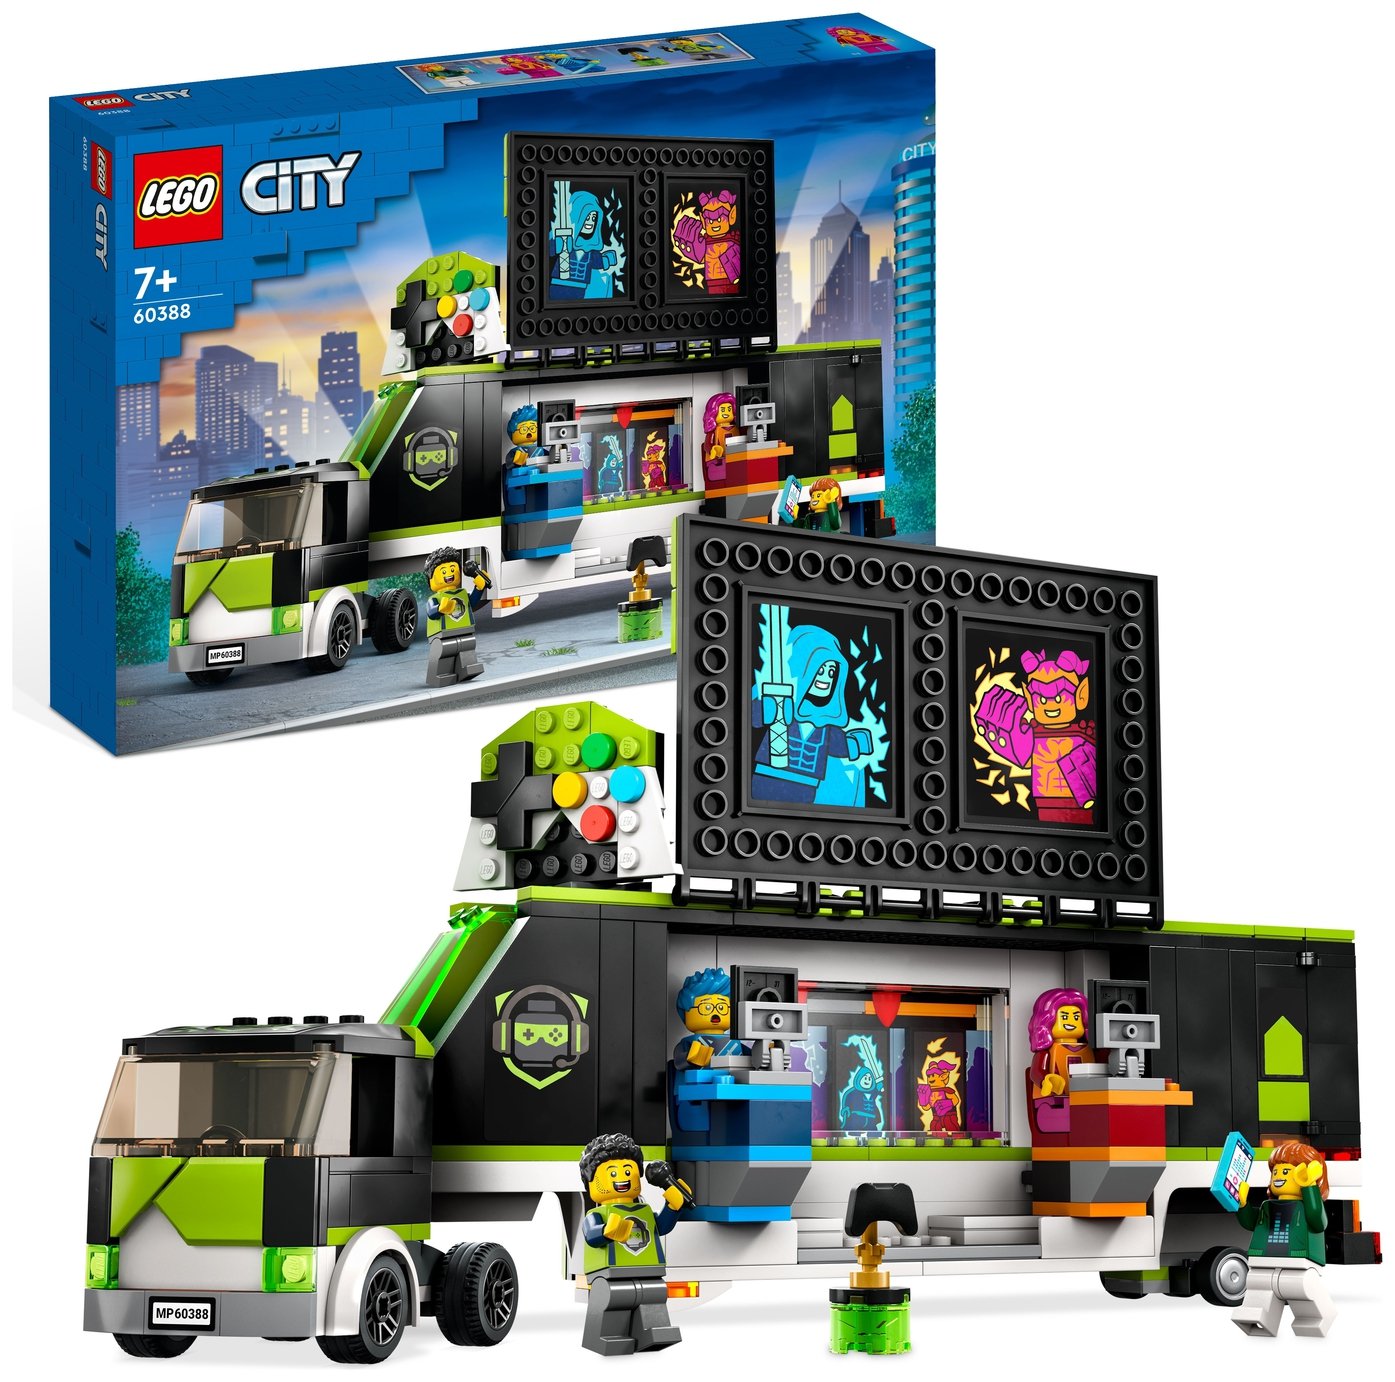 LEGO City Gaming Tournament Truck Esports Vehicle Toy 60388